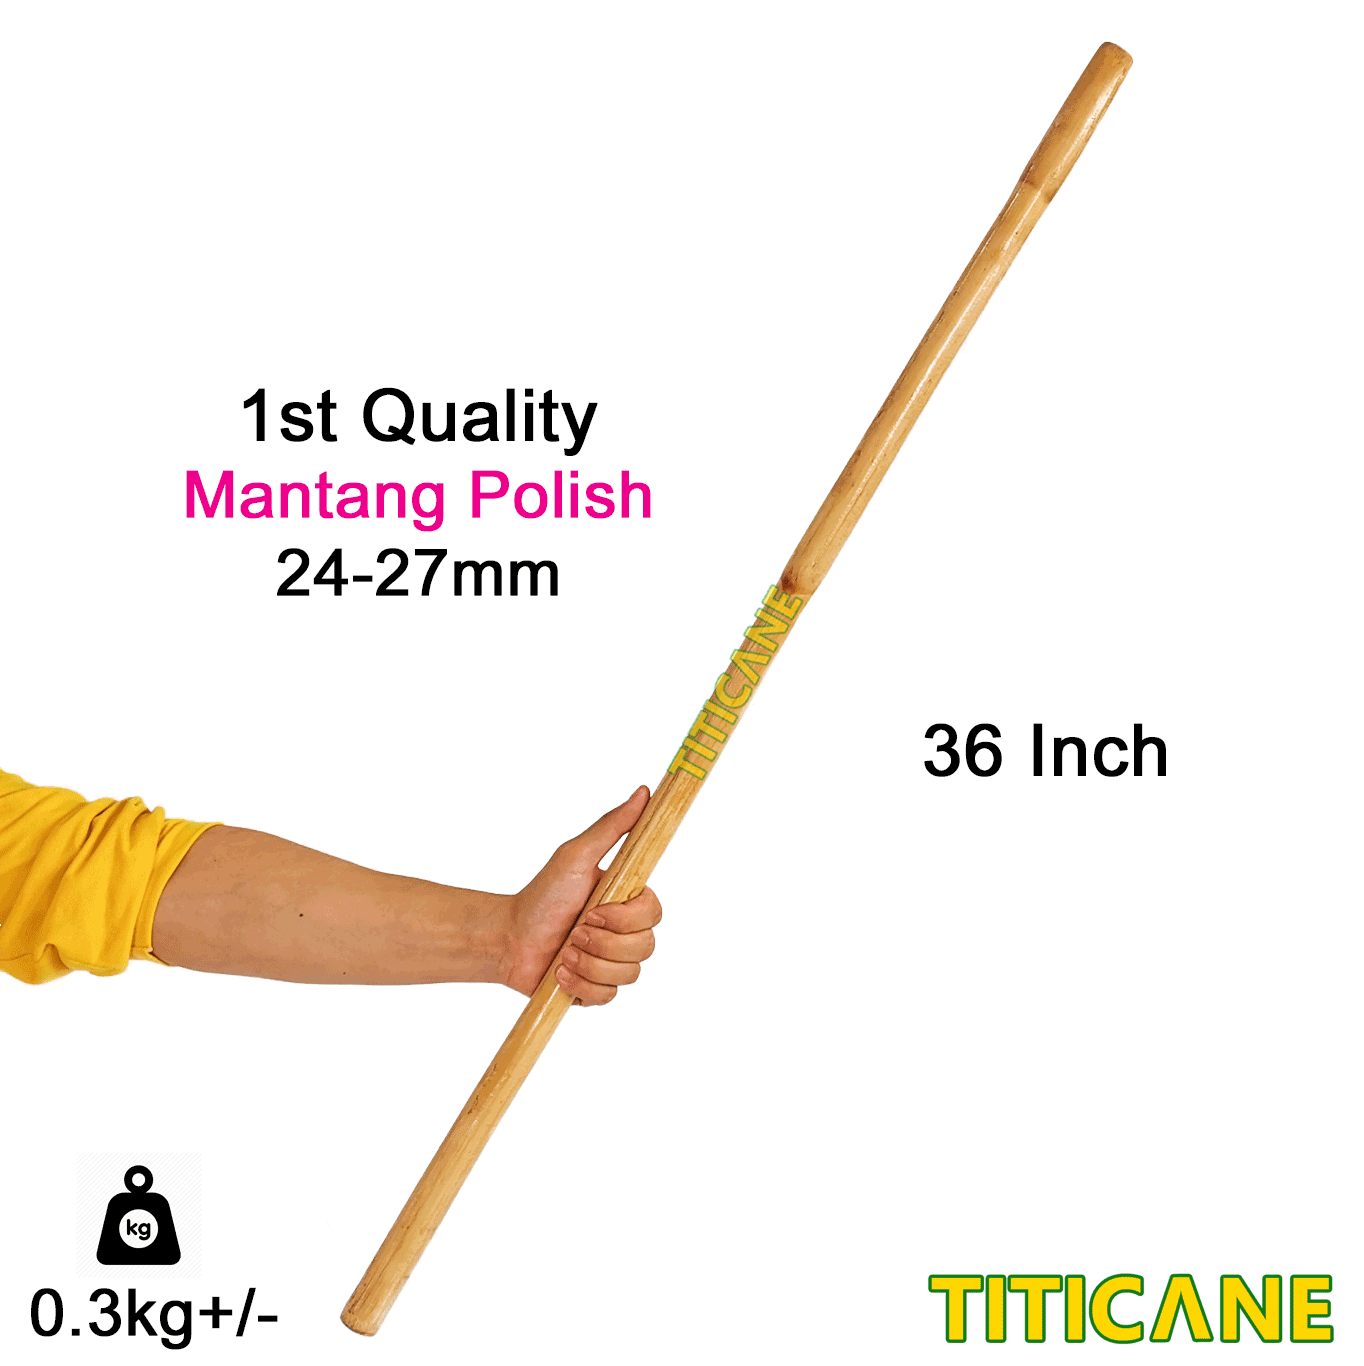 TITICANE Mantang Polish Stick 36 INCH 24 27mm 